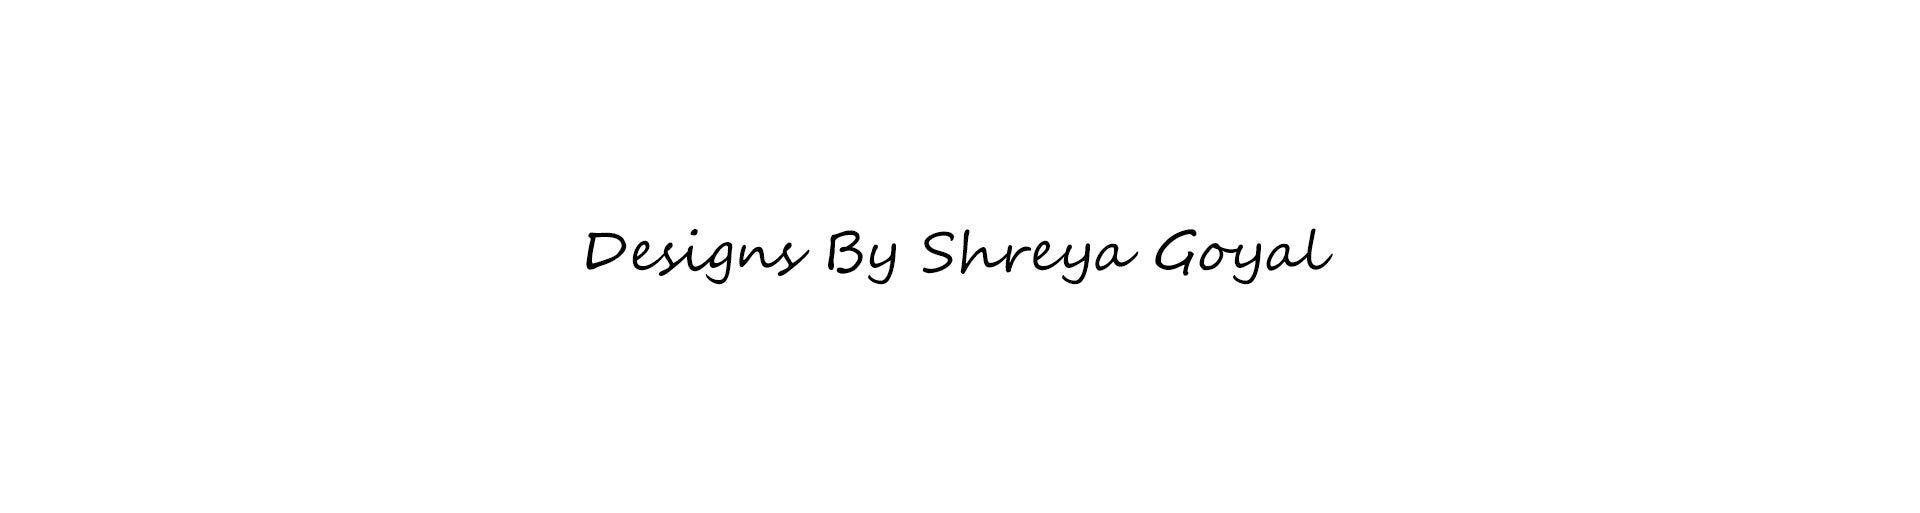 Shreya Goyal